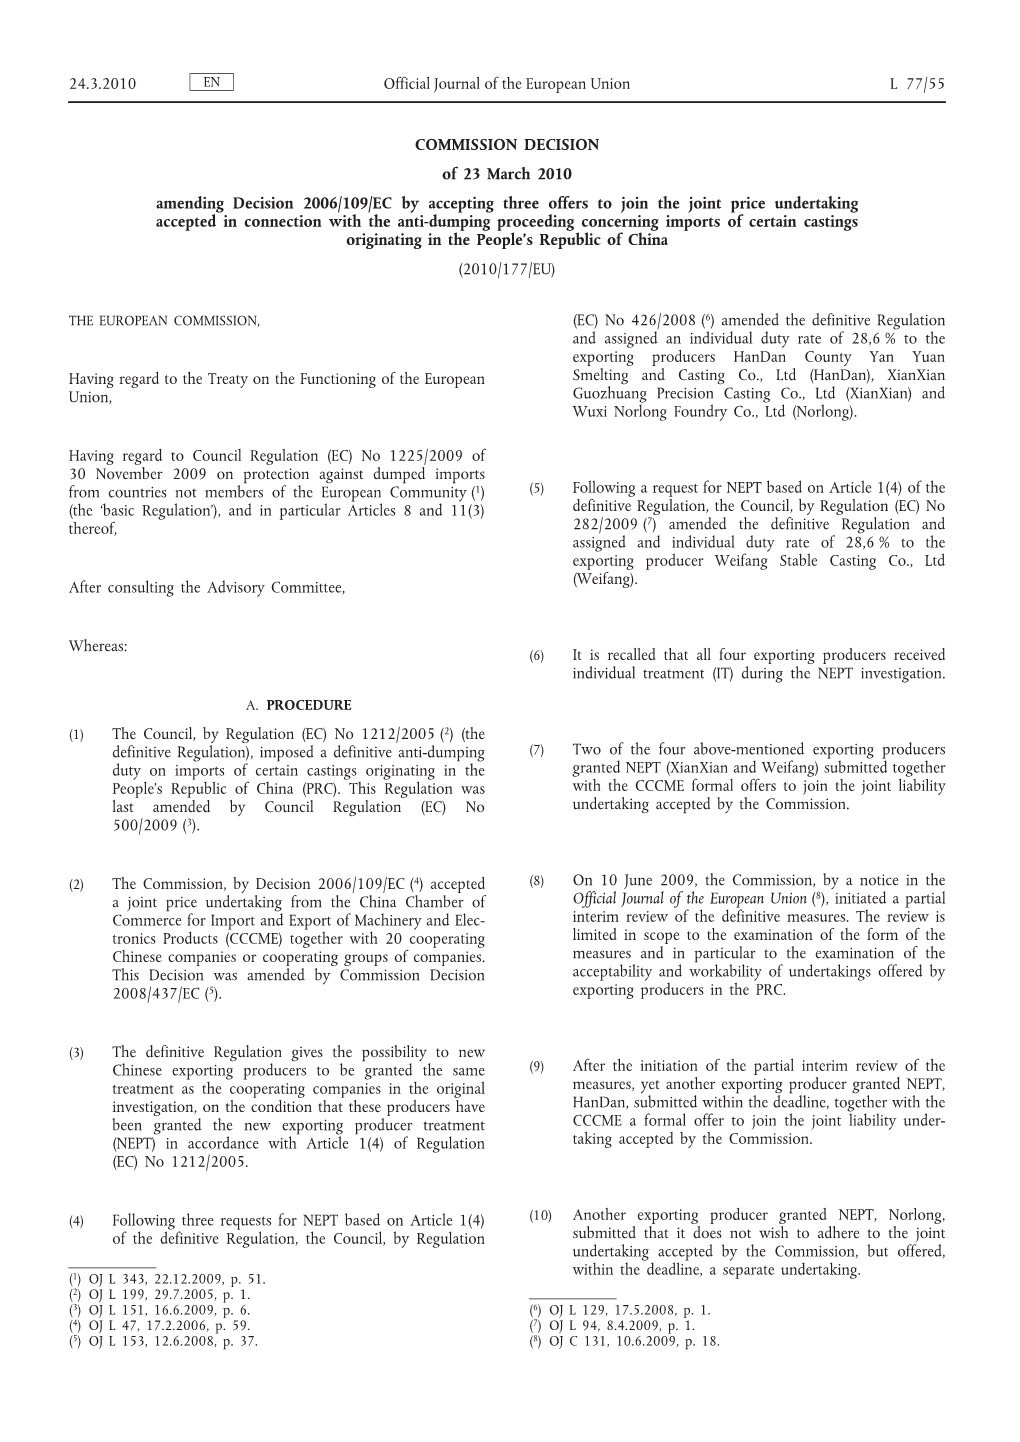 Commission Decision of 23 March 2010 Amending Decision 2006/109